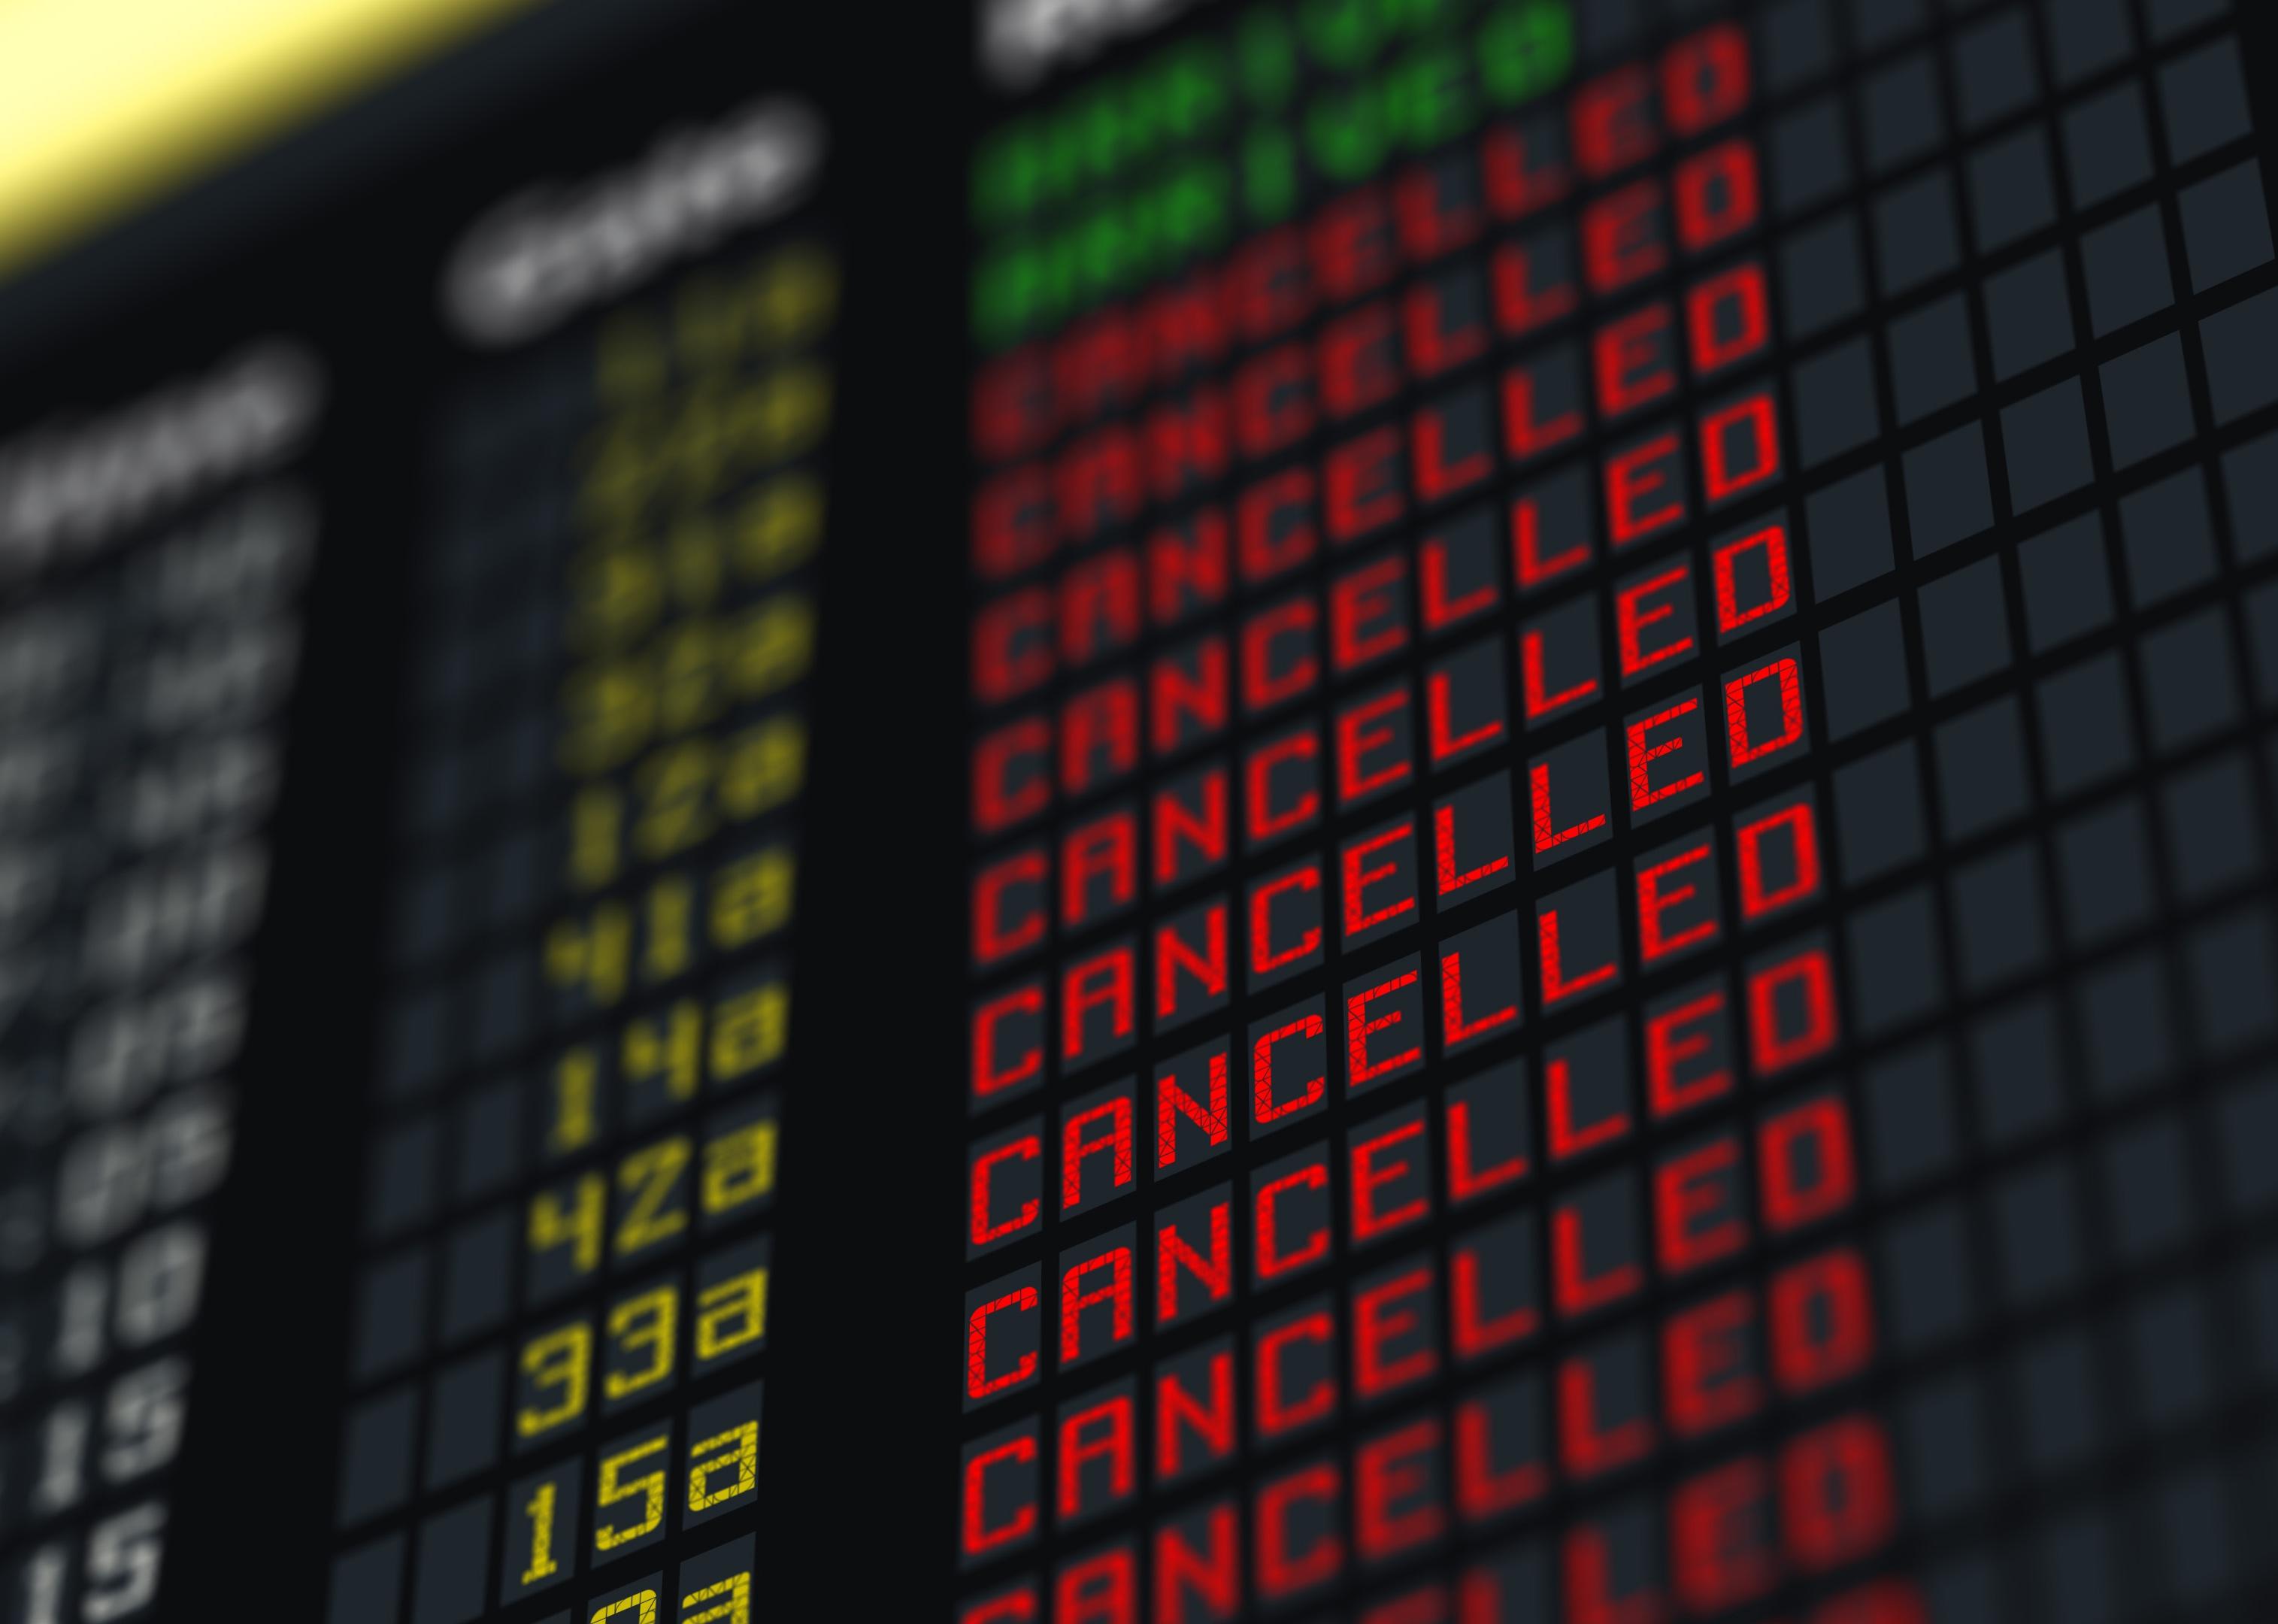 Flights canceled or delayed on information board